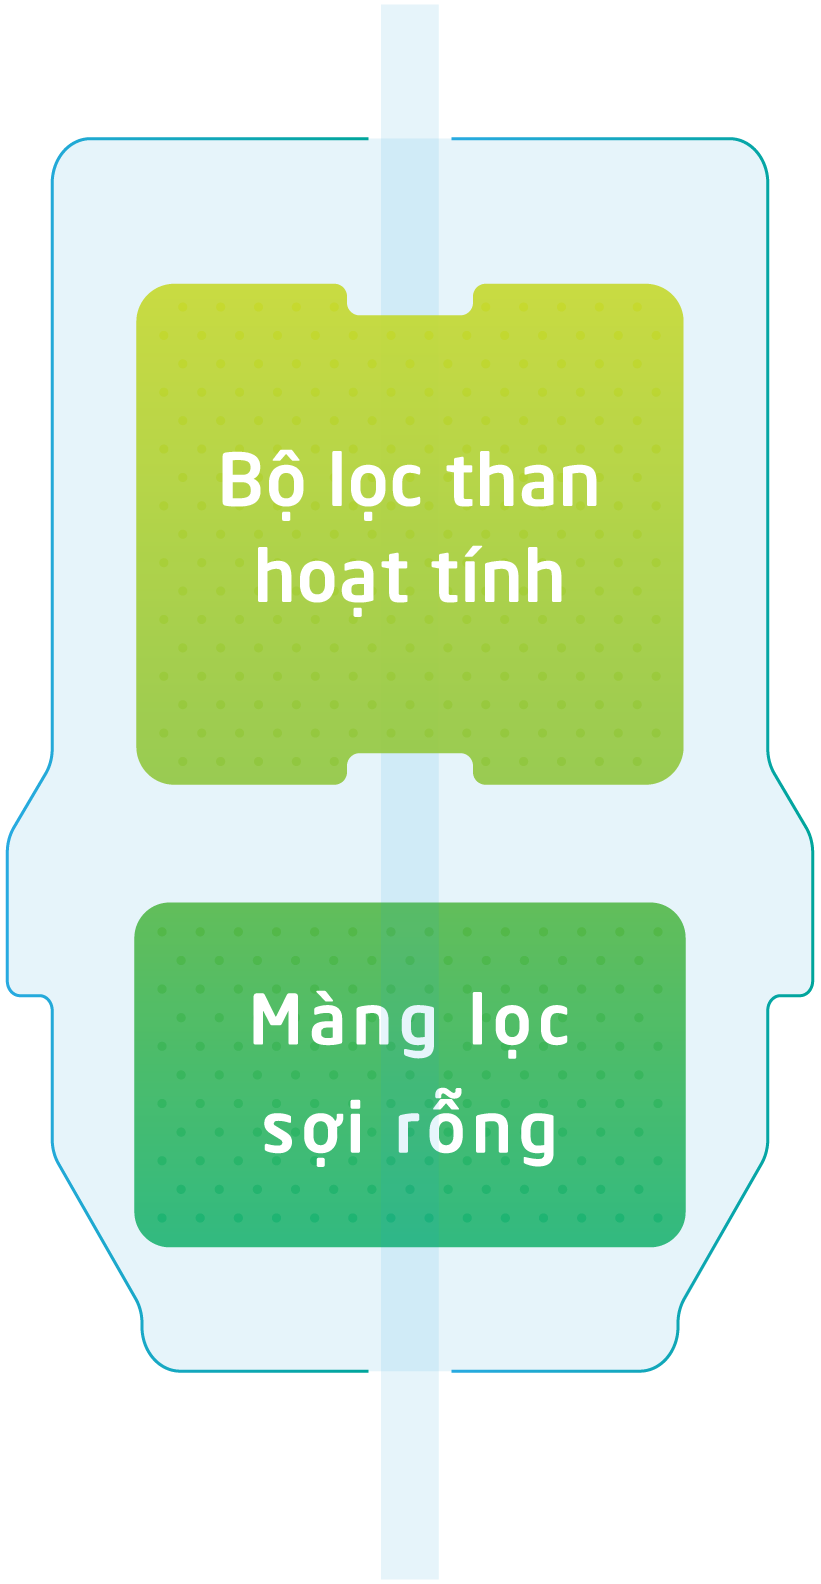 Web Trang Cong Nghe 36